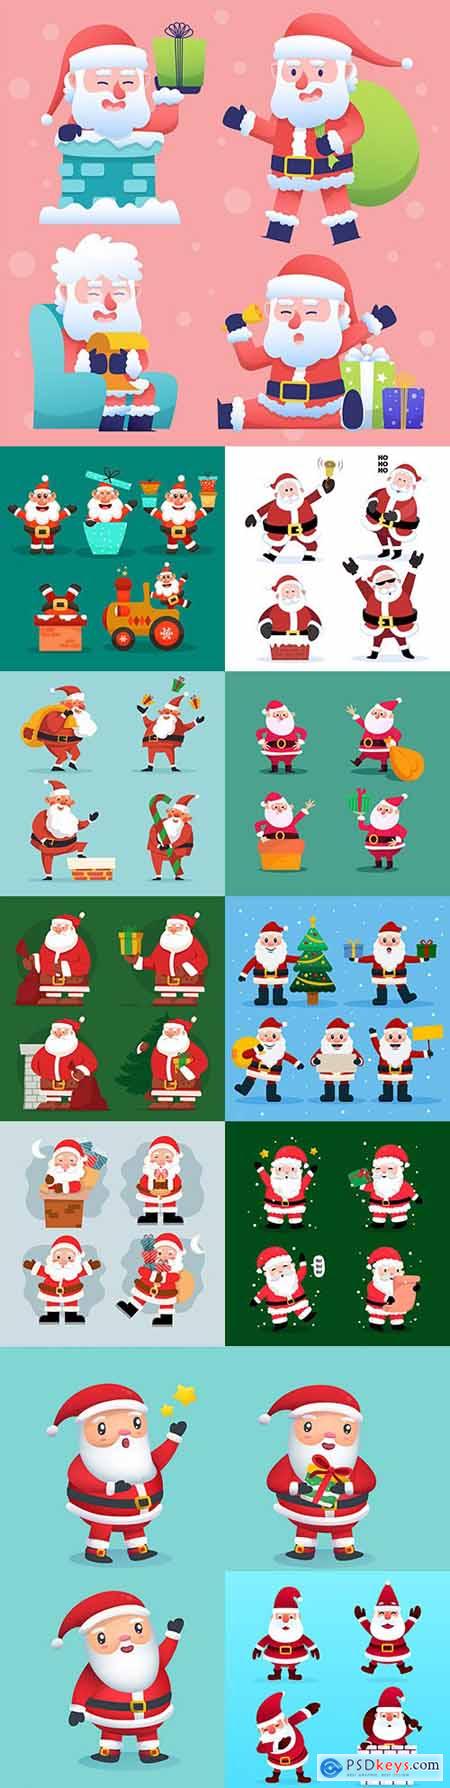 Santa Claus Christmas character flat design collection